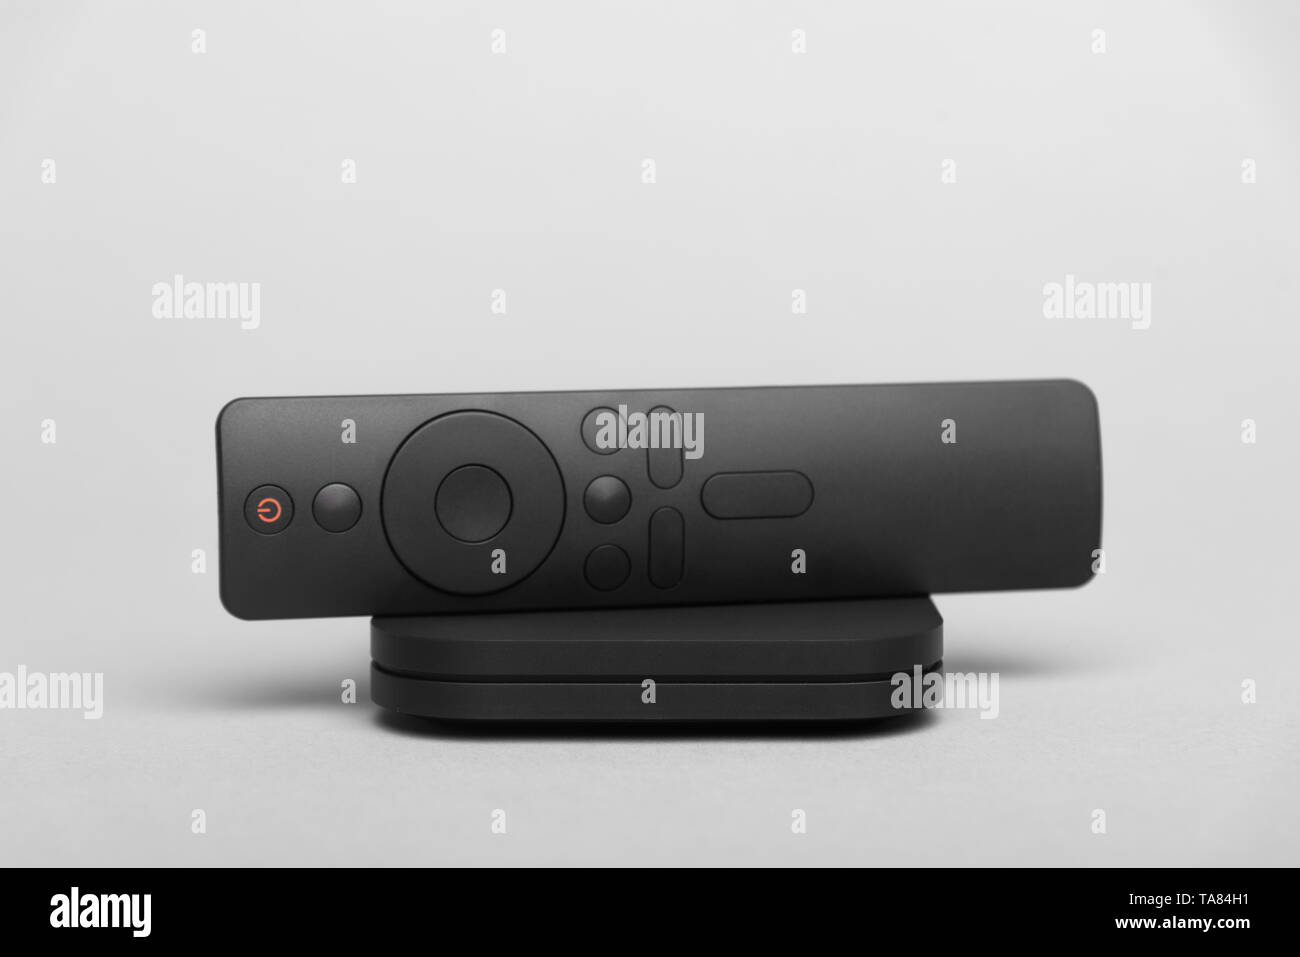 Digital TV on gray background. Stock Photo